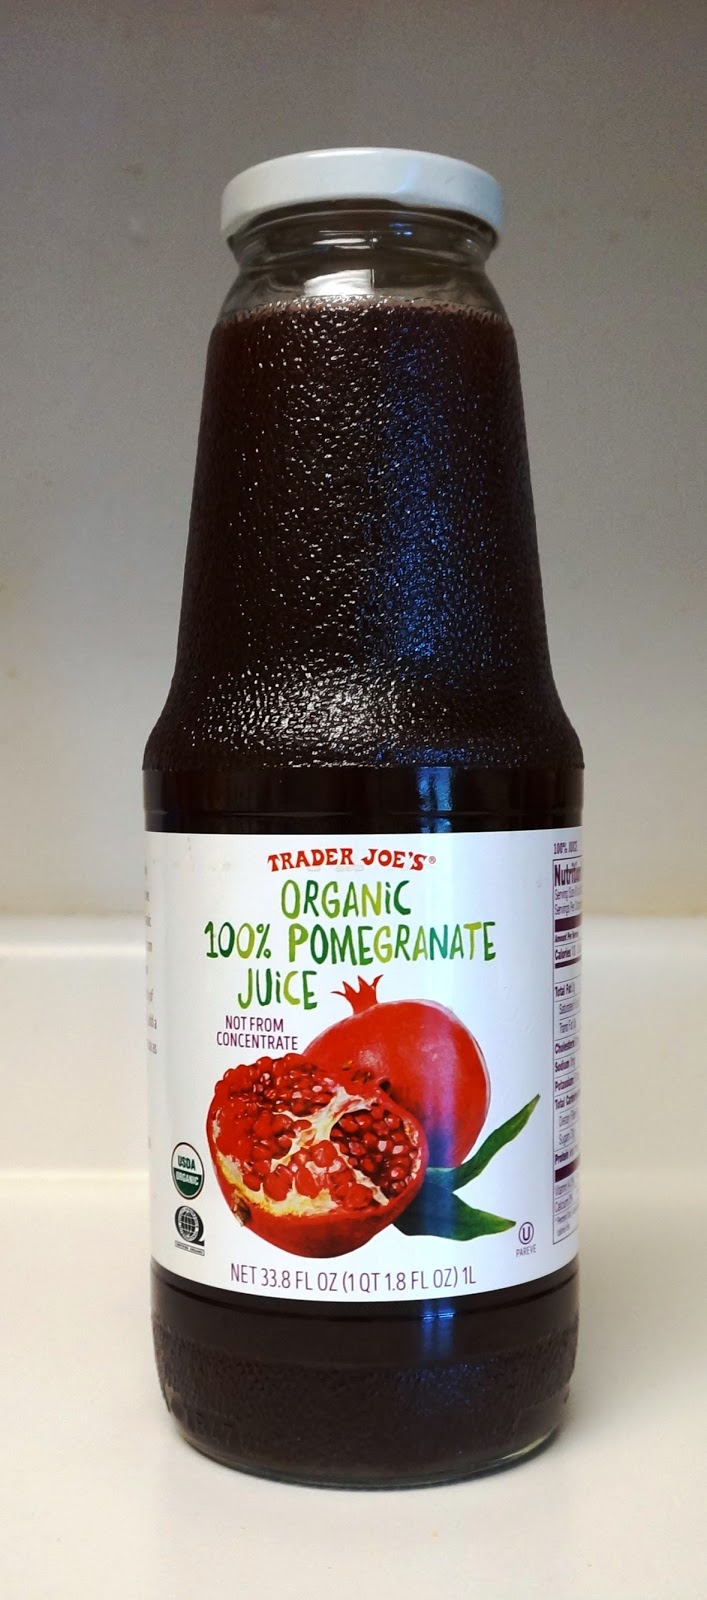 Exploring Trader Joe's: Trader Joe's Organic 100% Pomegranate Juice Not